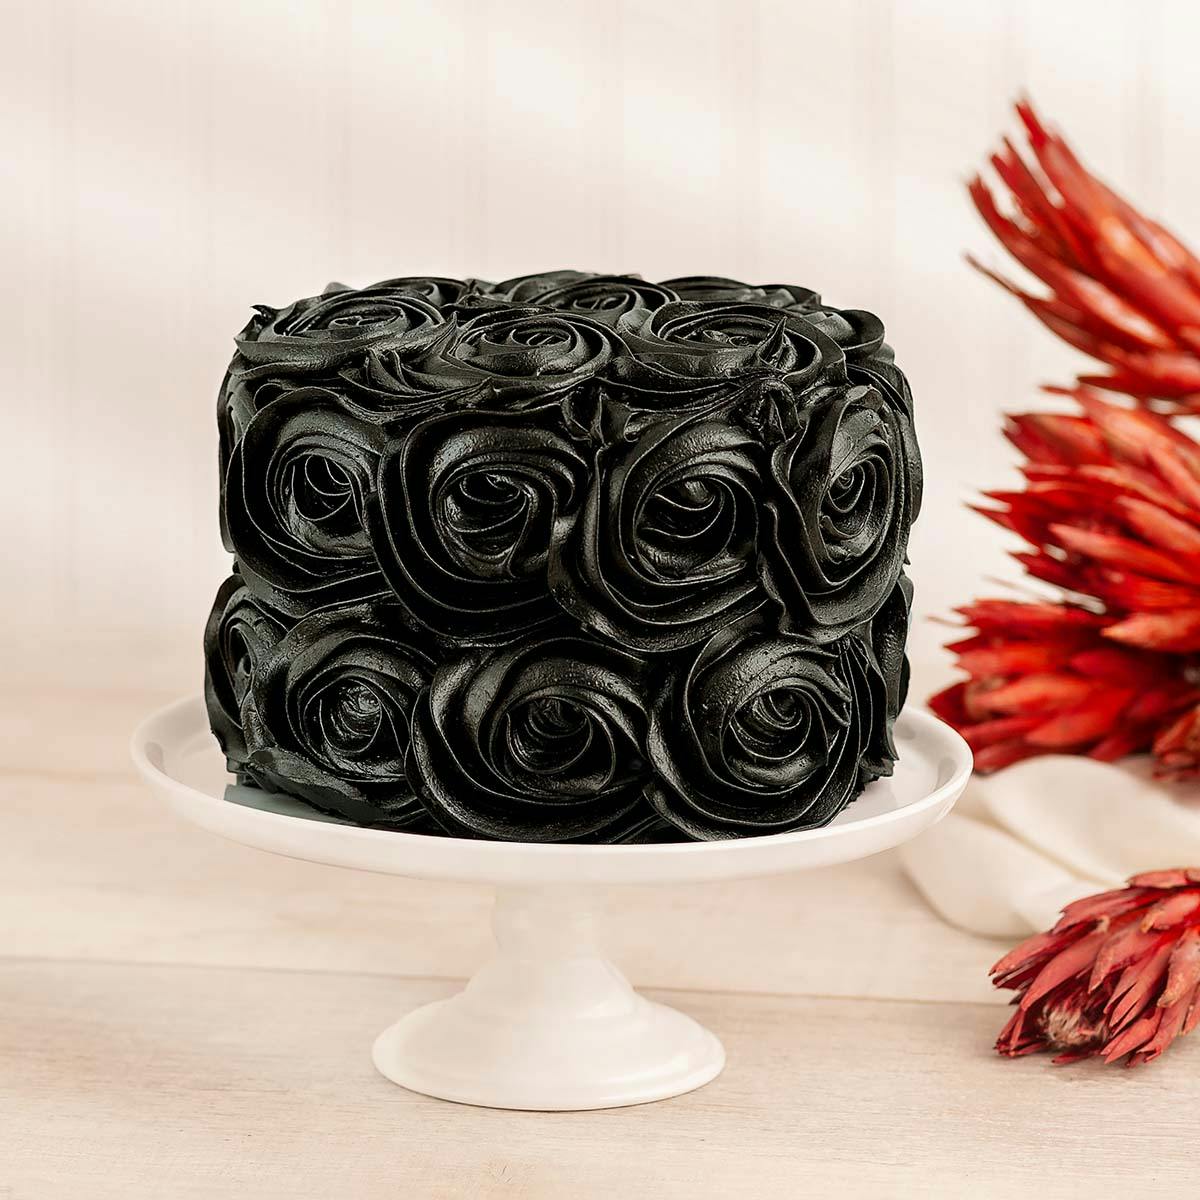 15 Unique Black Wedding Cakes - Find Your Cake Inspiration